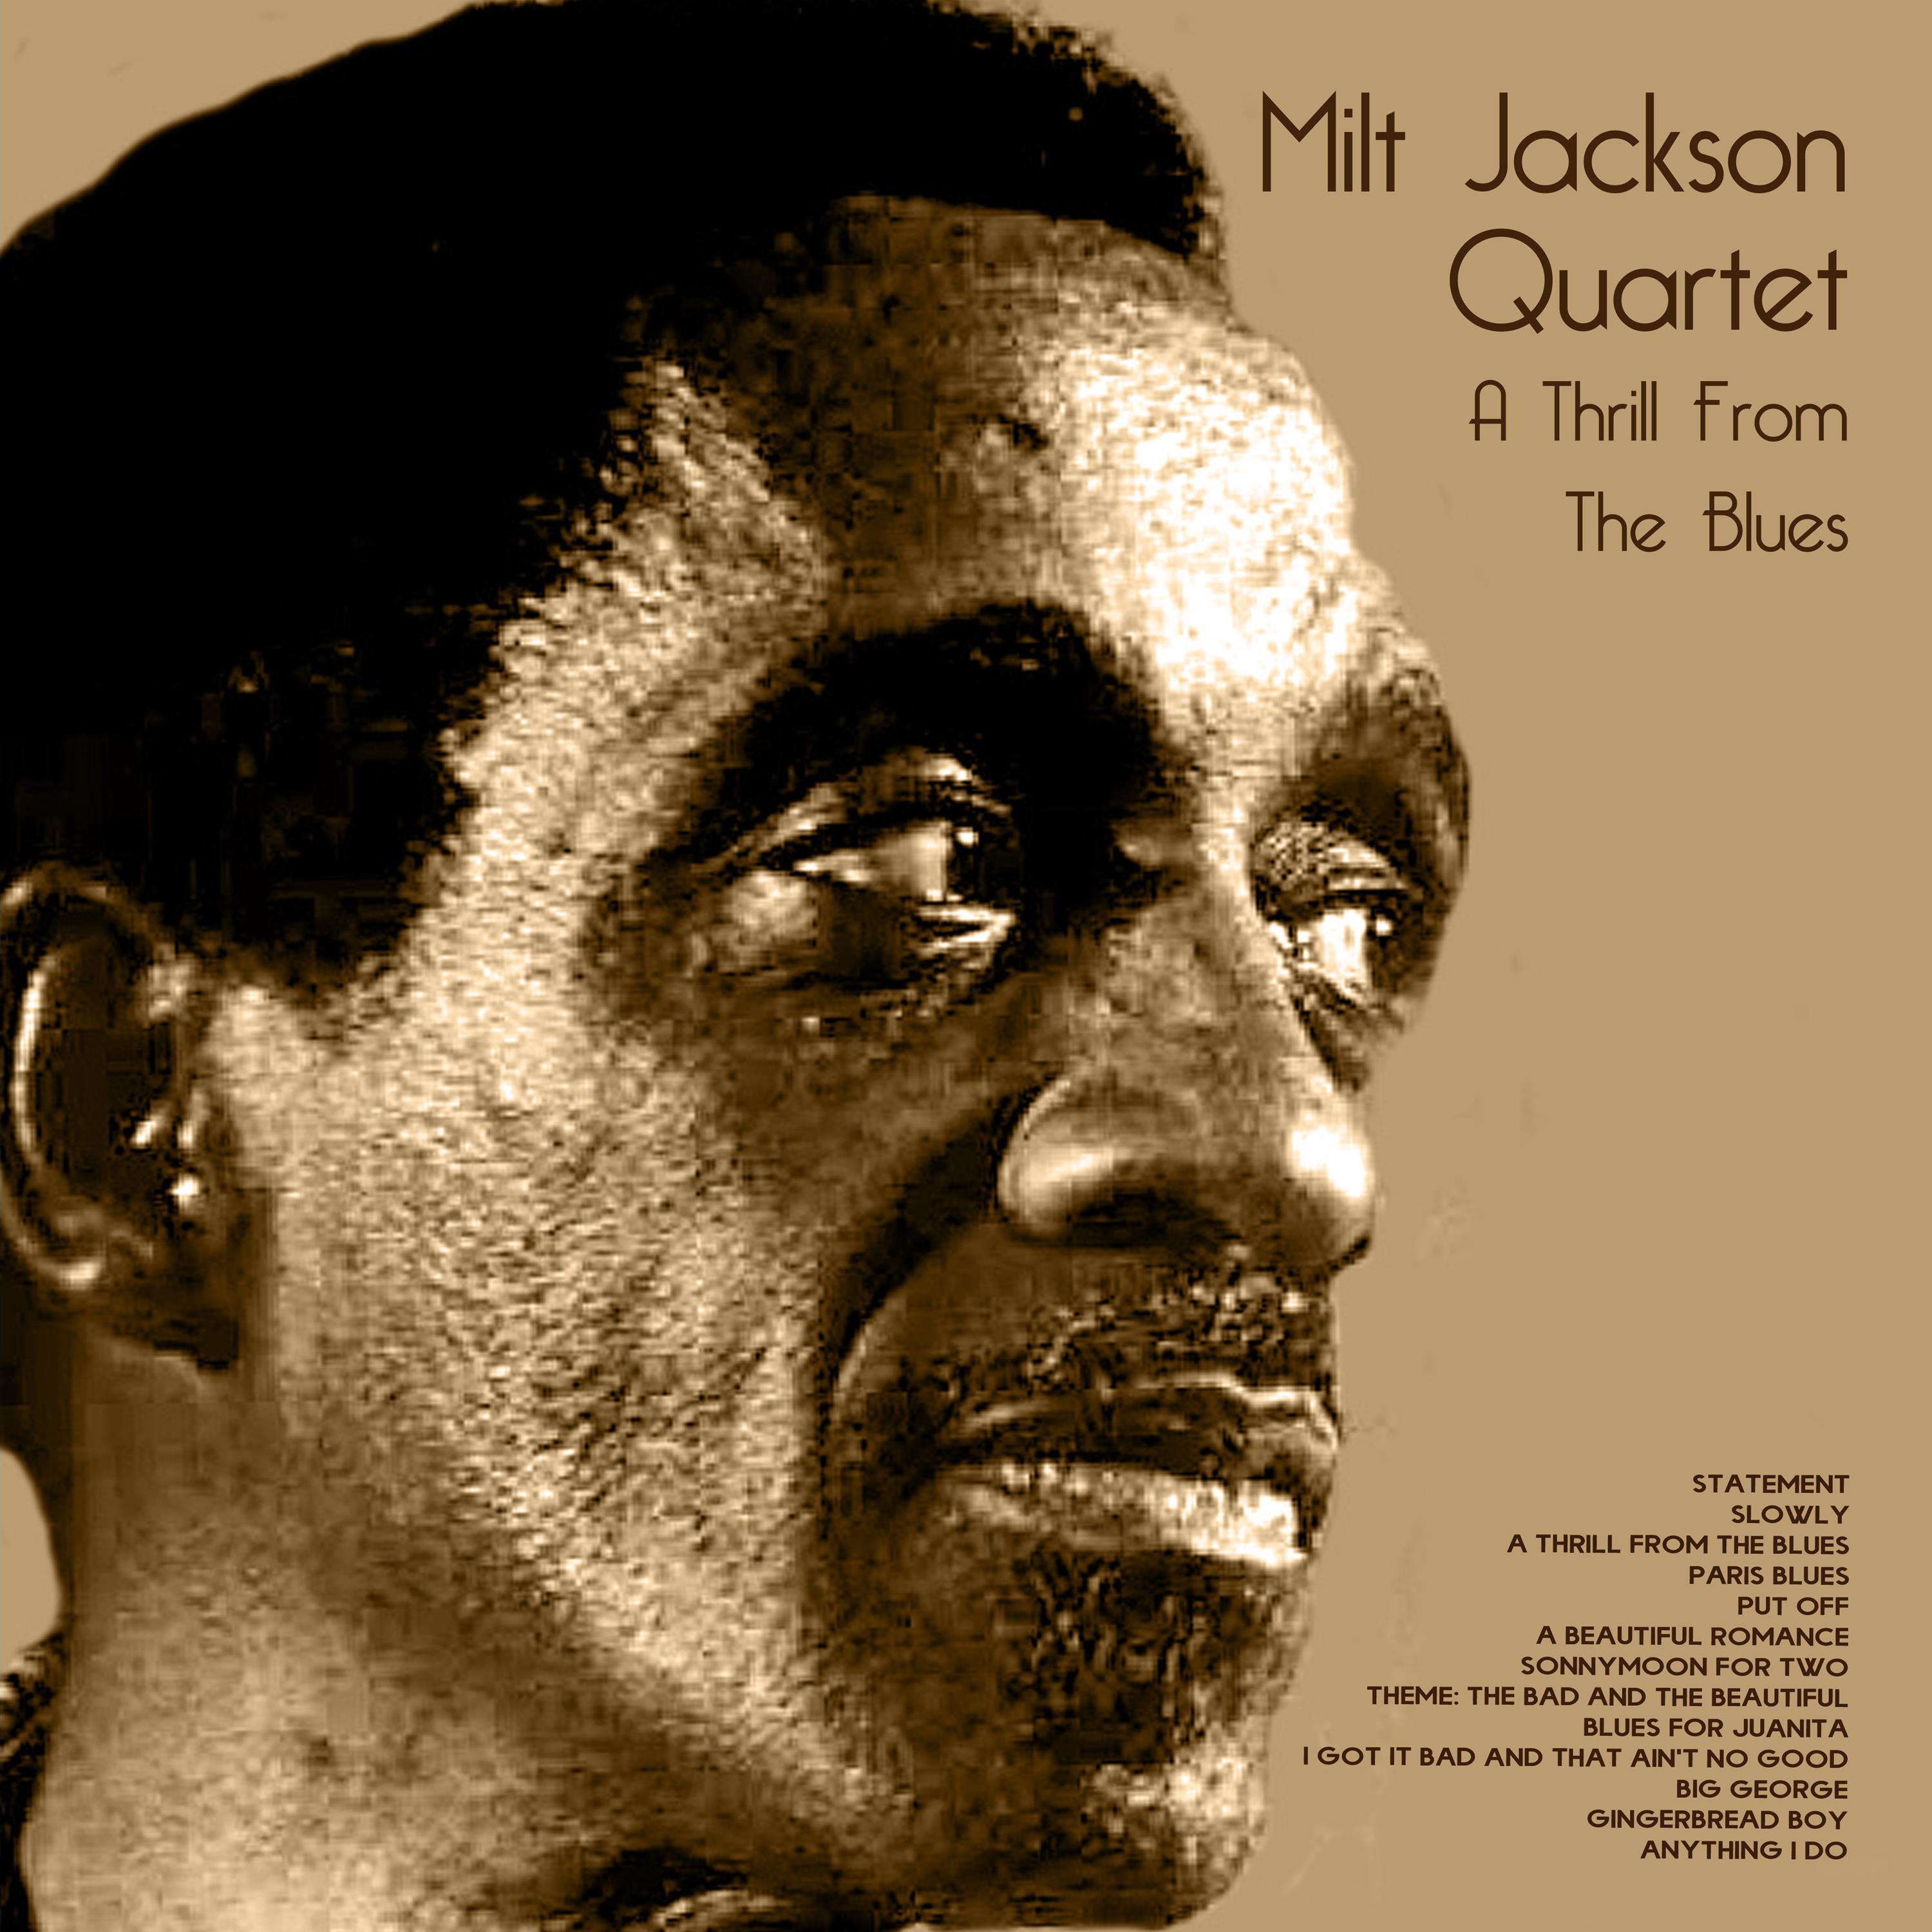 Milt Jackson Quartet - A Thrill from the Blues